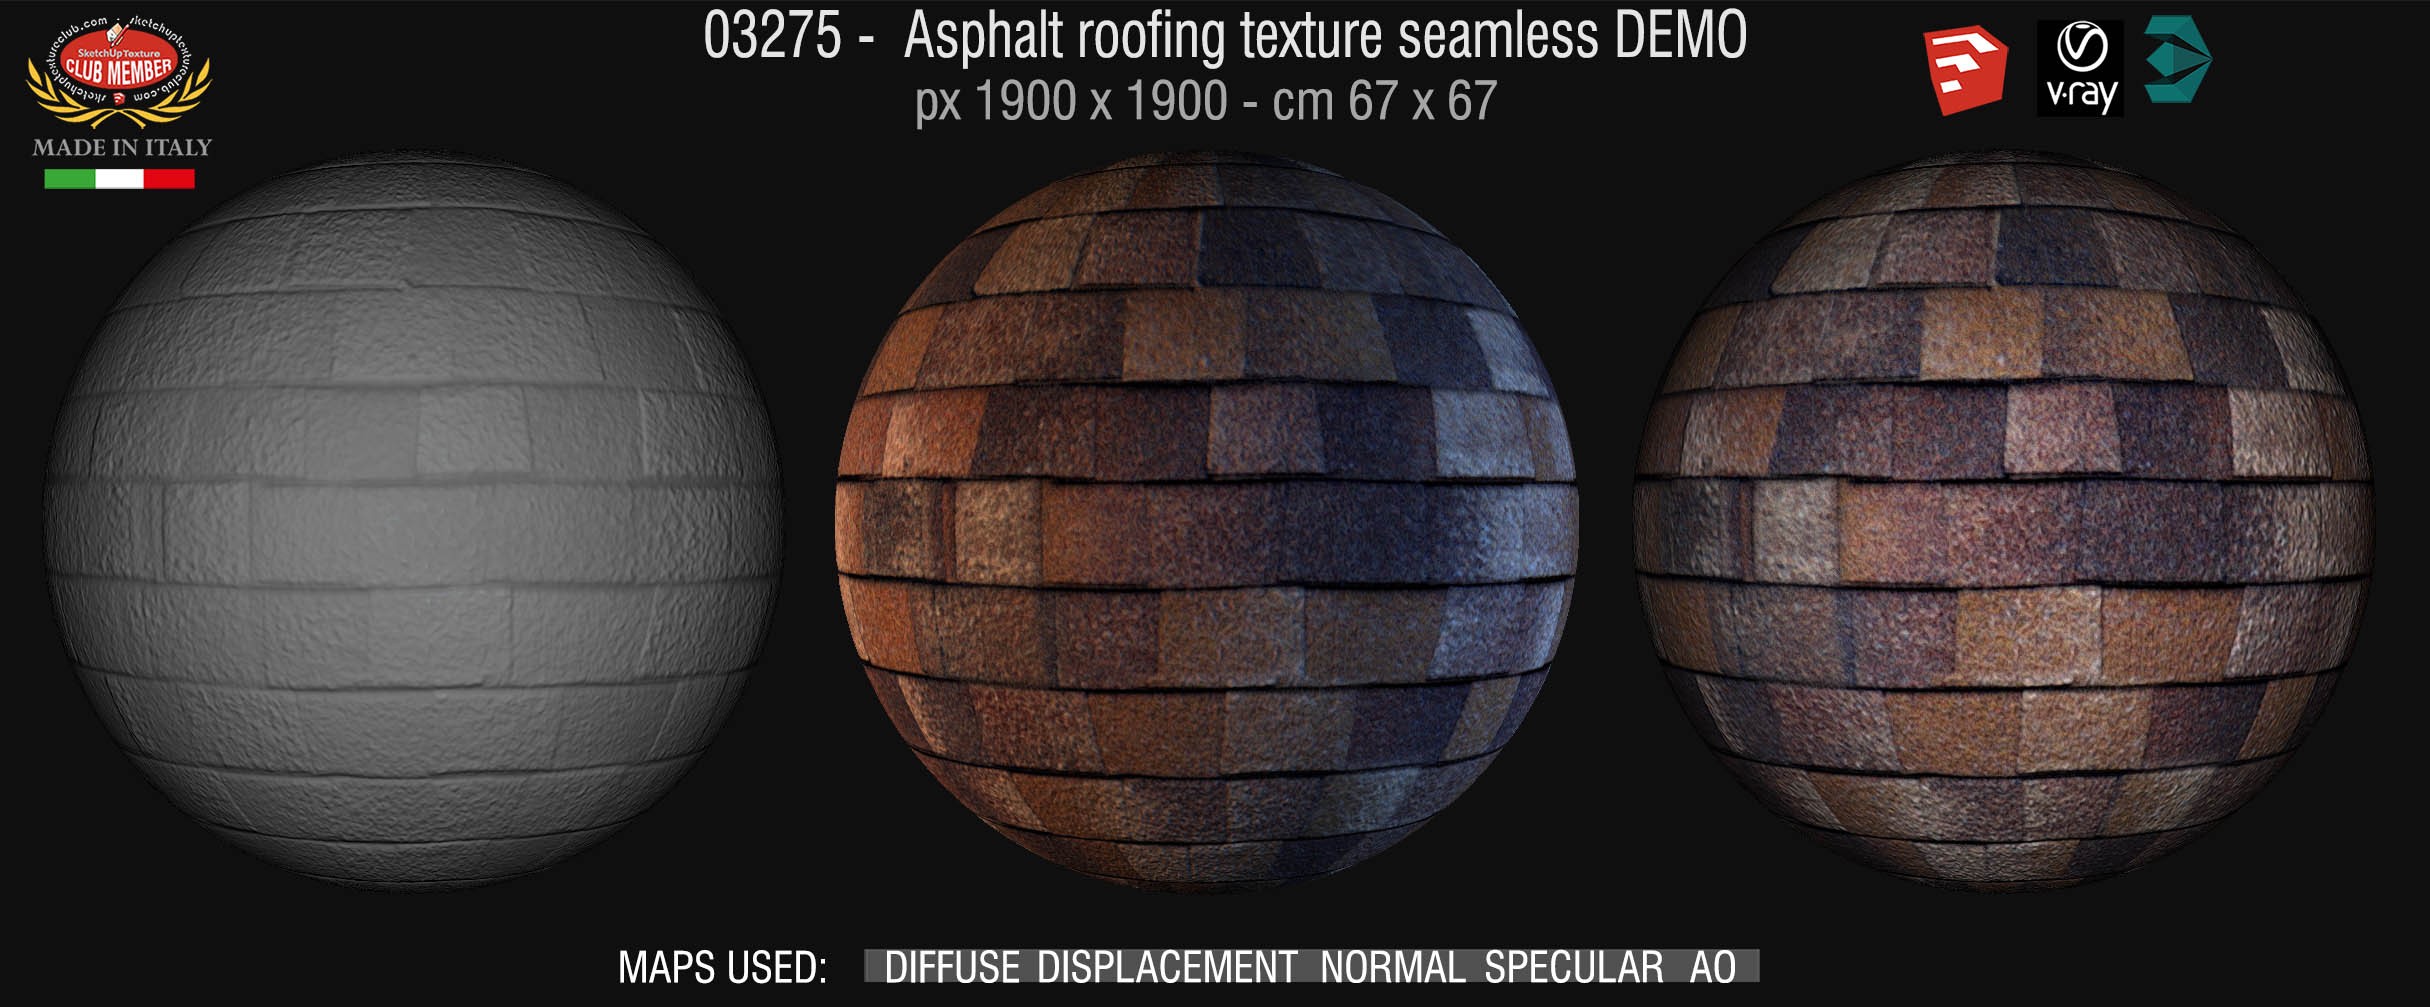 03275 Asphalt roofing texture + maps DEMO